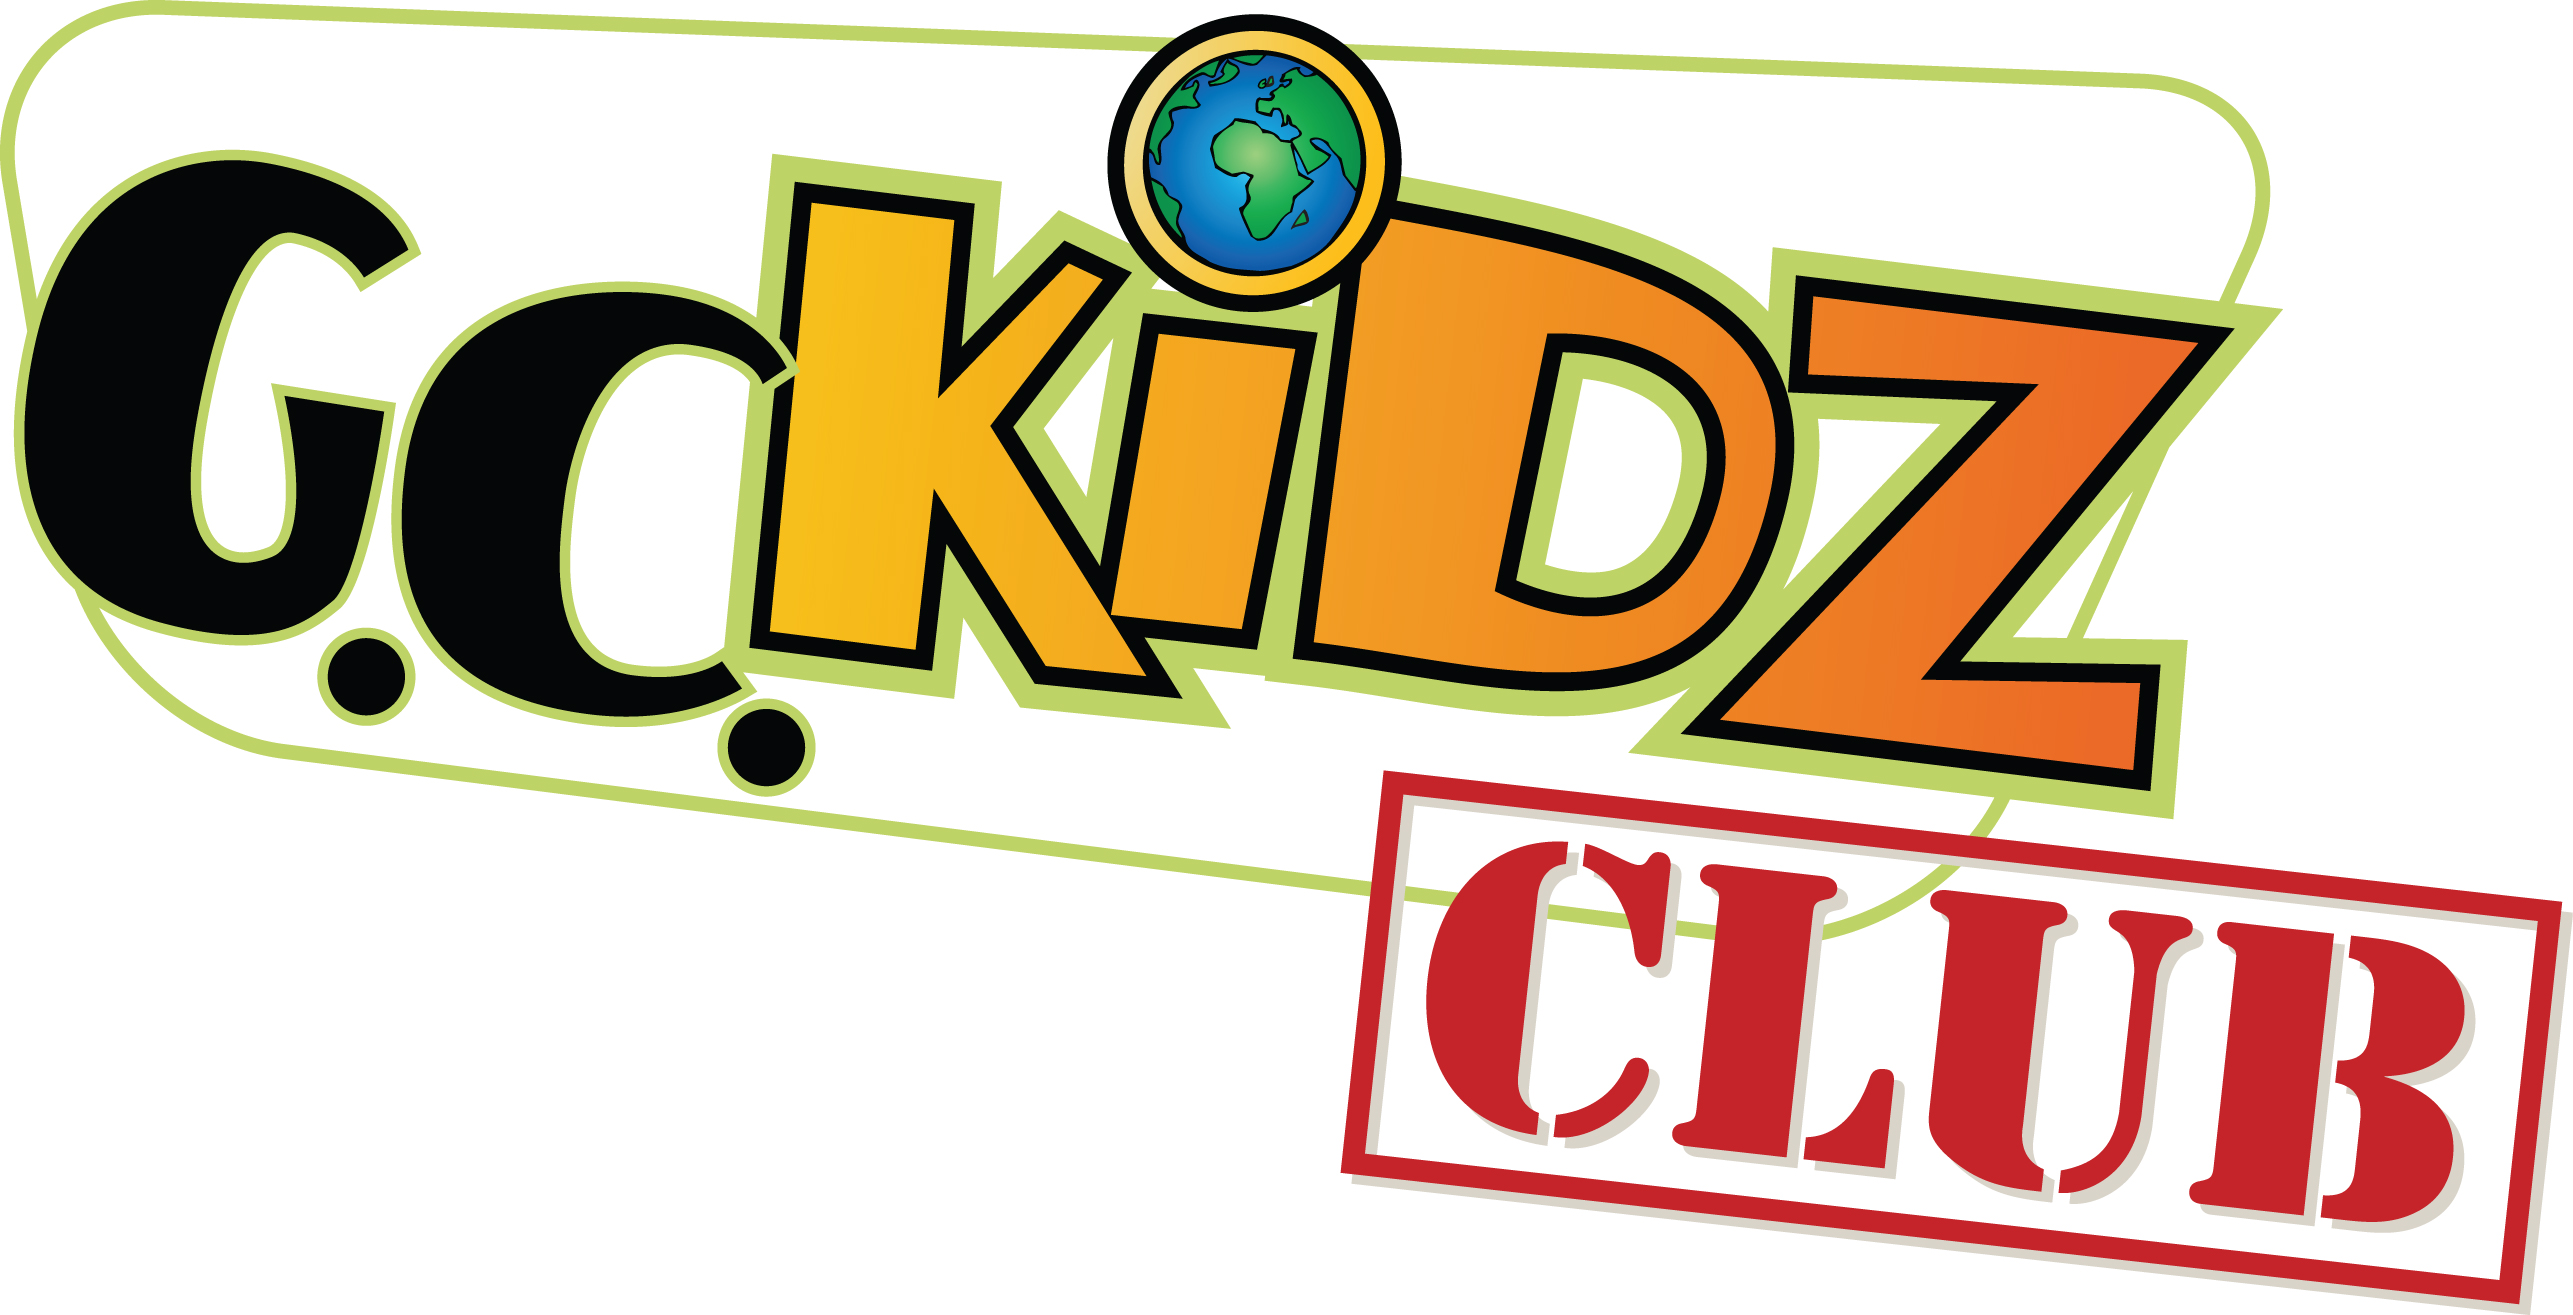 Ministry Clipart Gckidz Club Logo Jpg